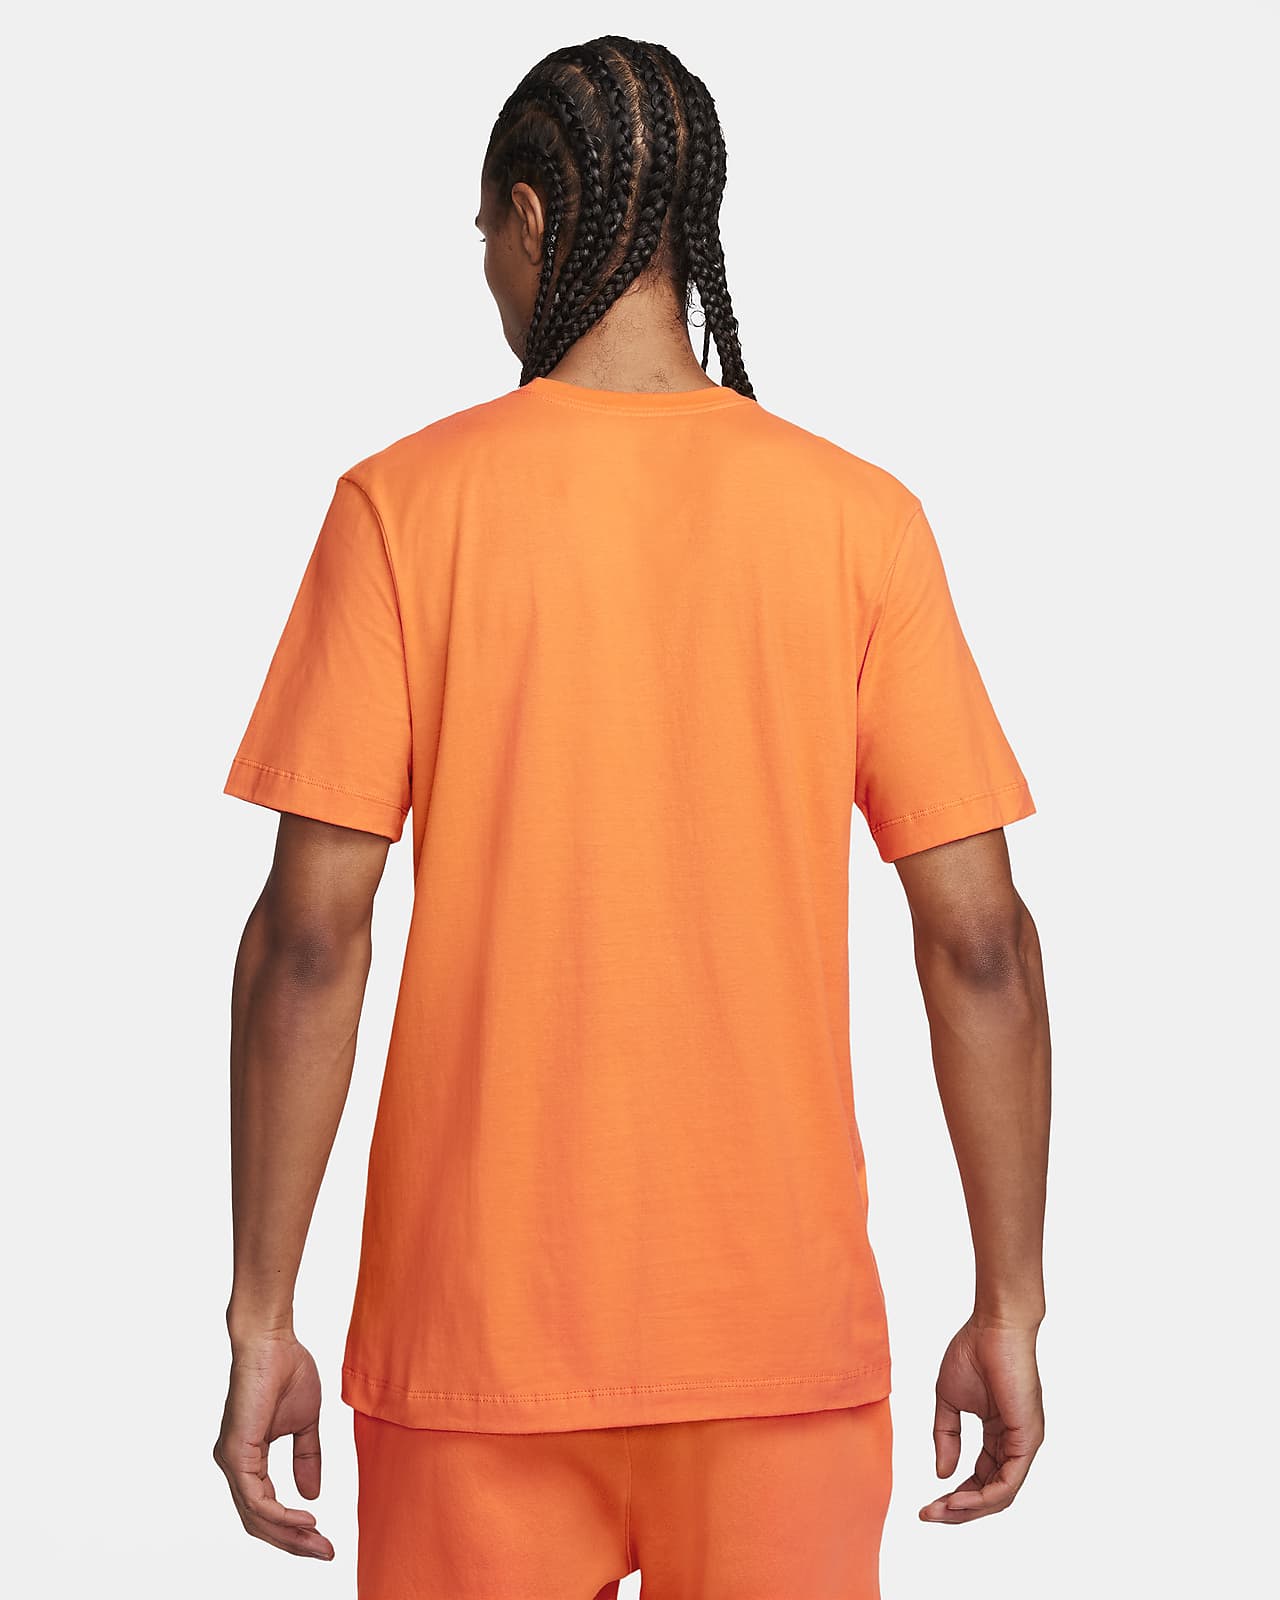 U.S. Swoosh Nike T-Shirt.